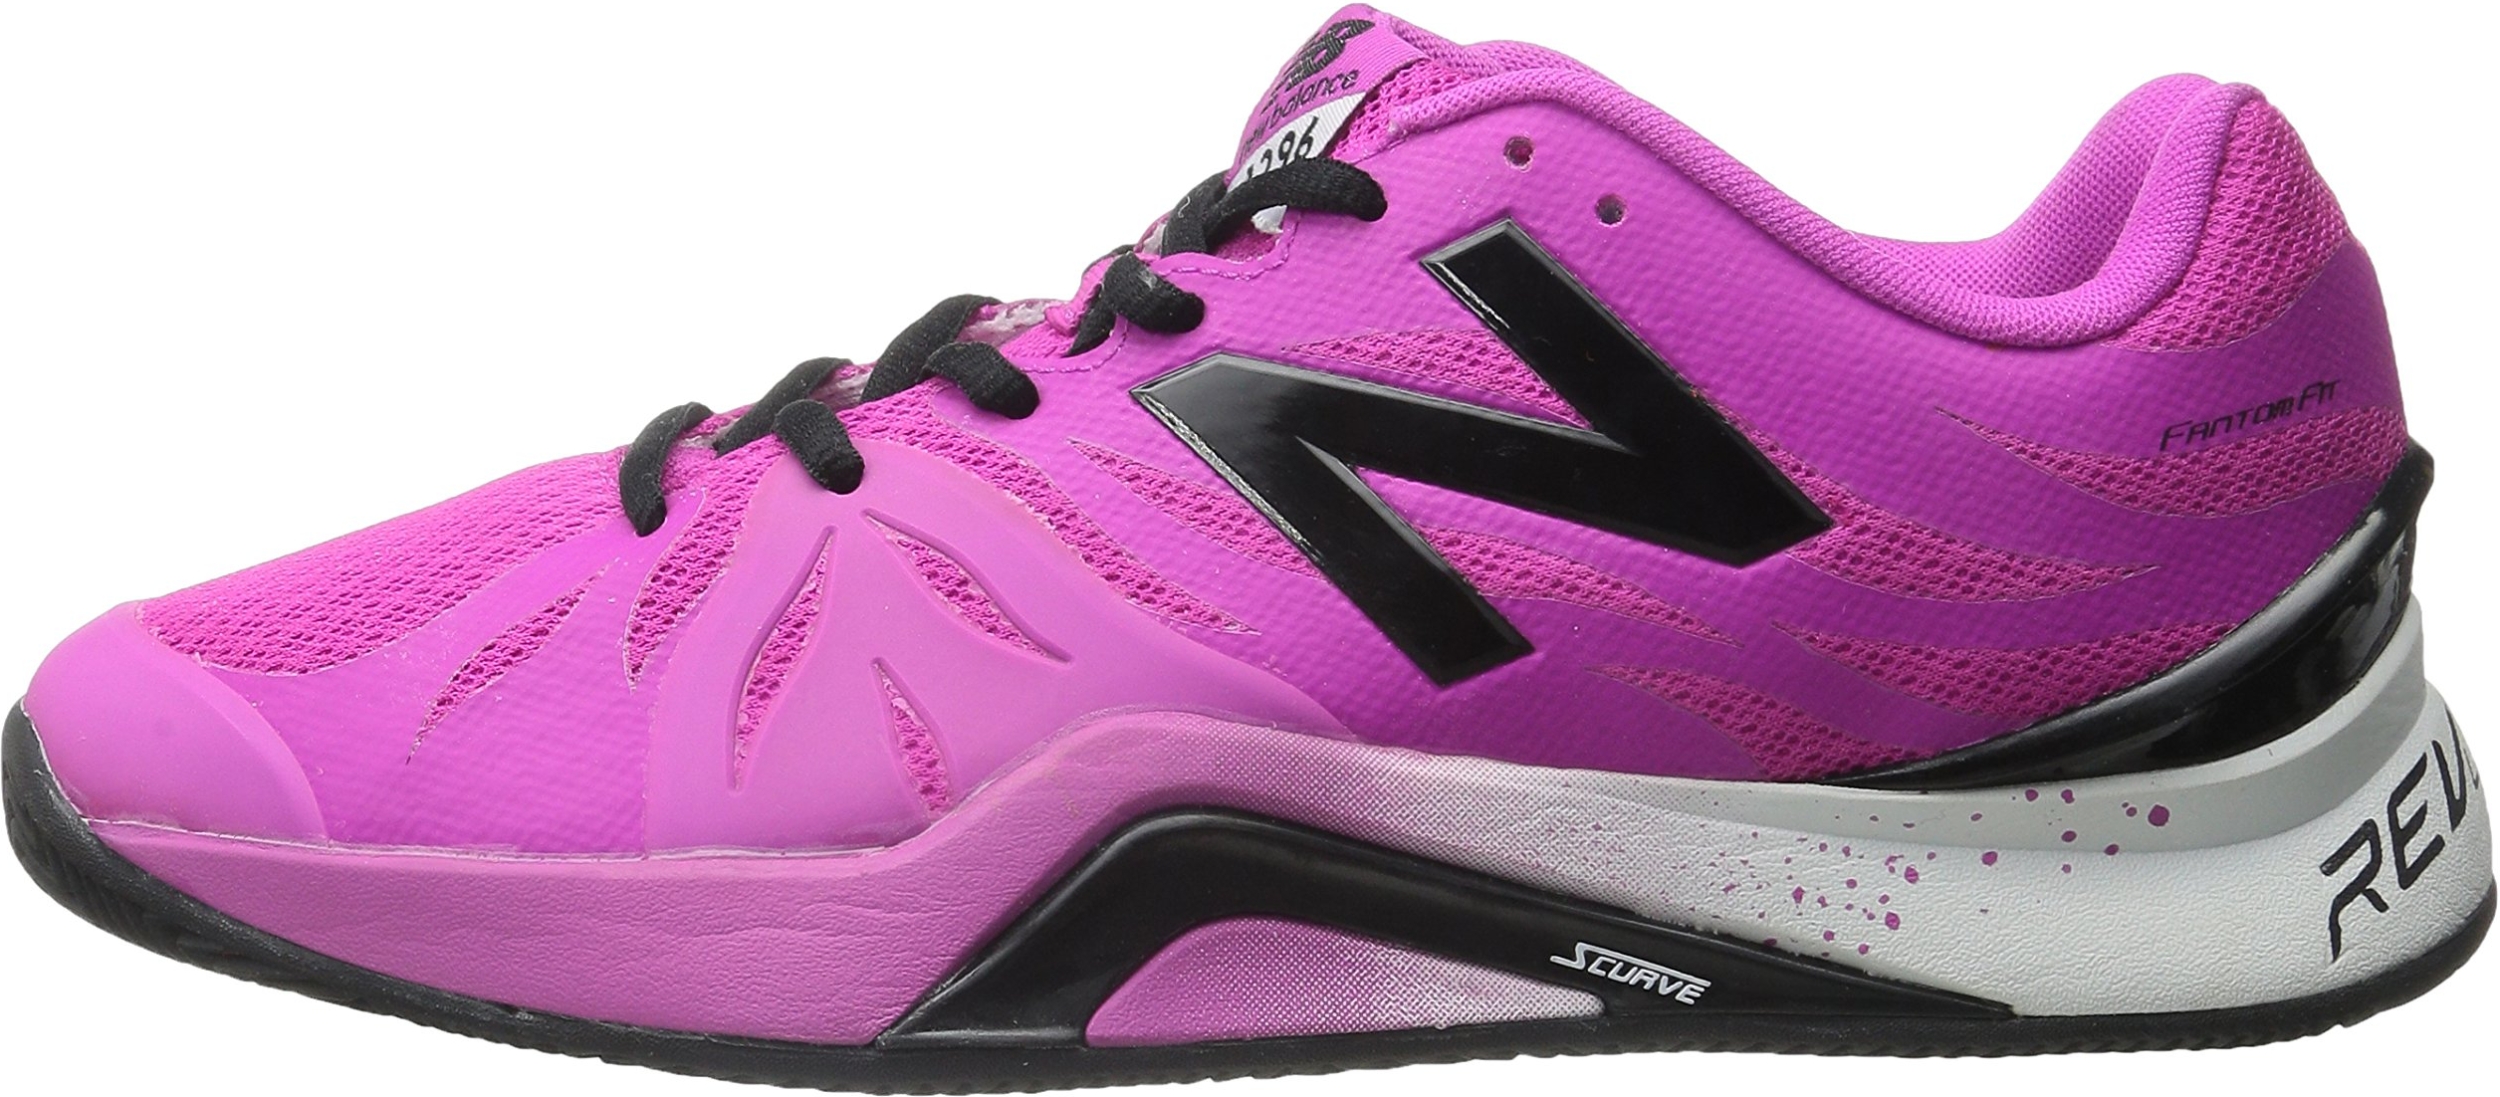 womens black new balance tennis shoes